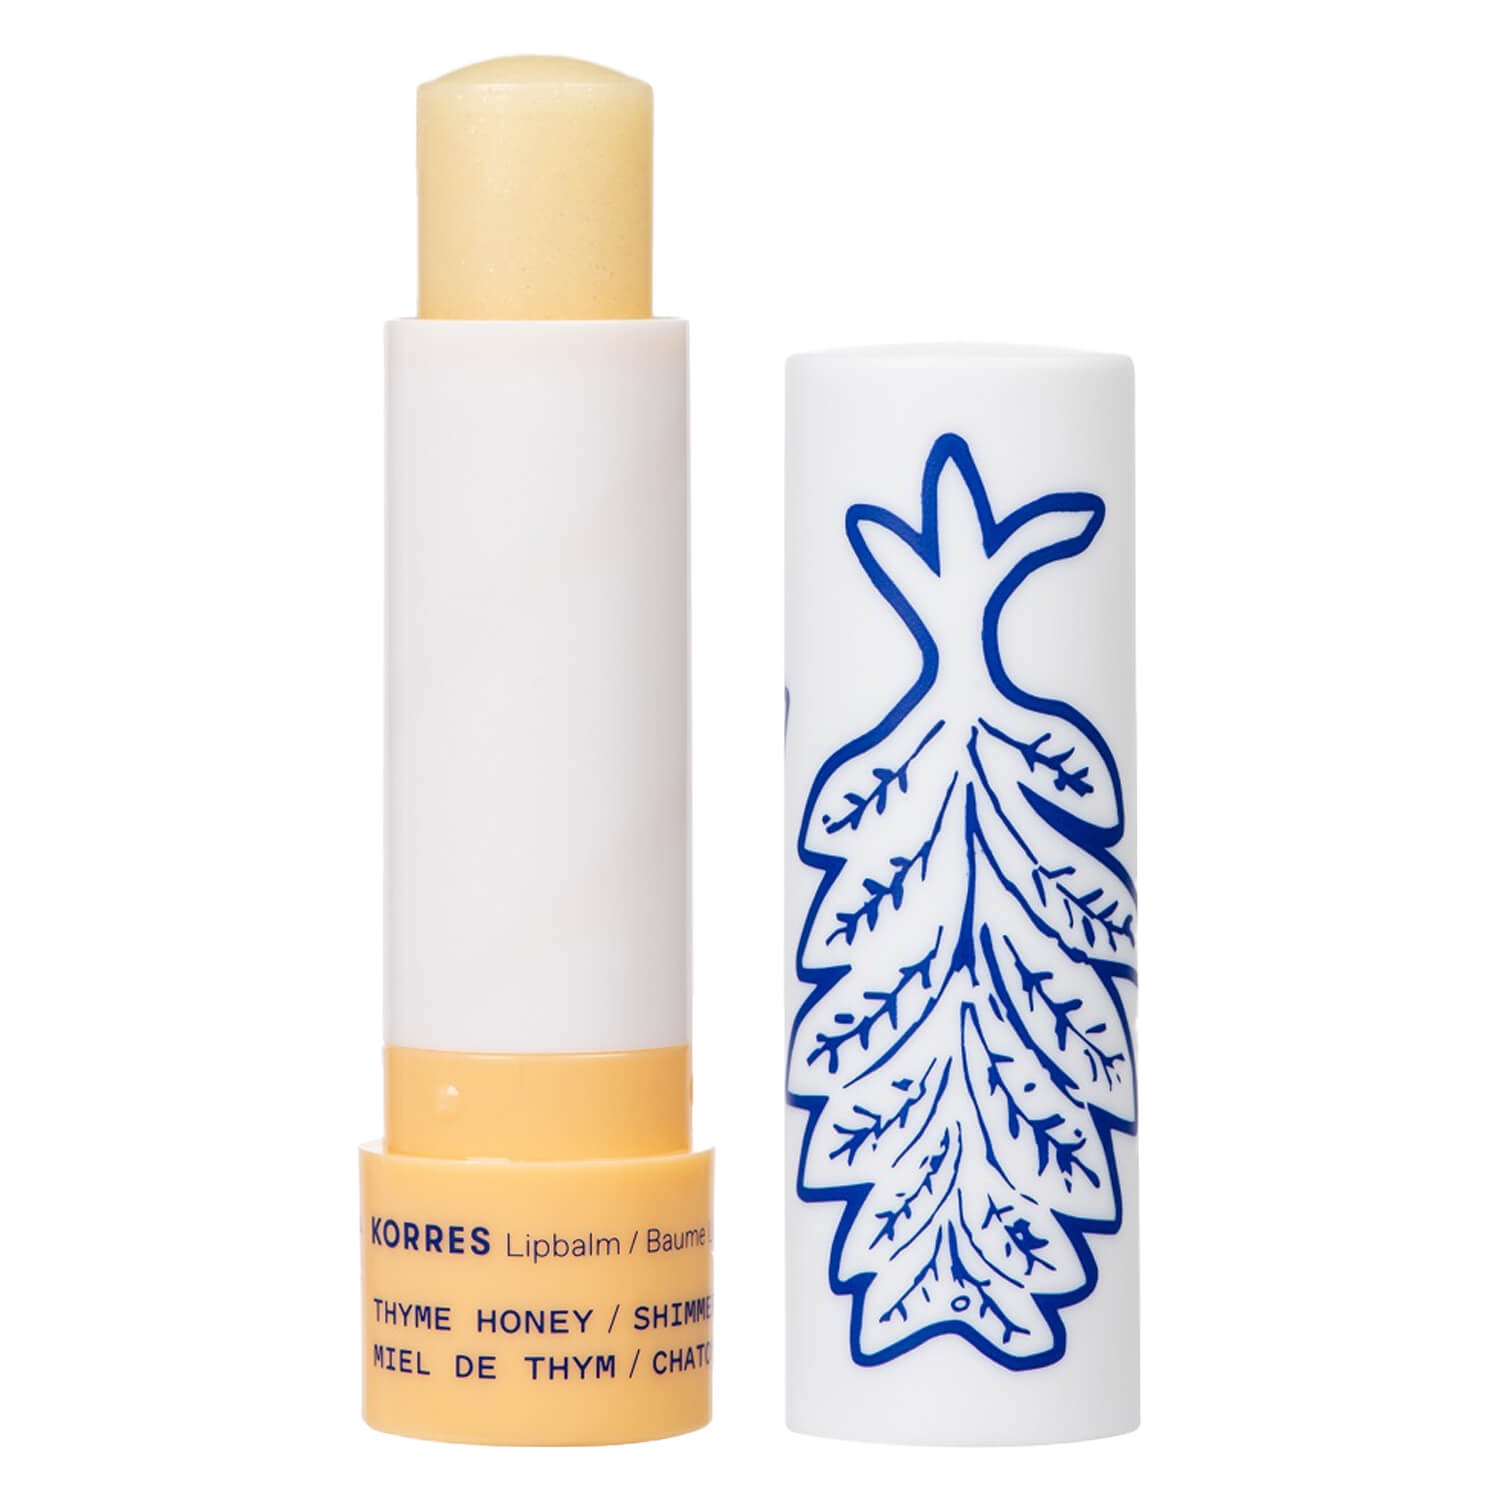 Image du produit de Korres Care - Thyme Honey Lip Balm Shimmery